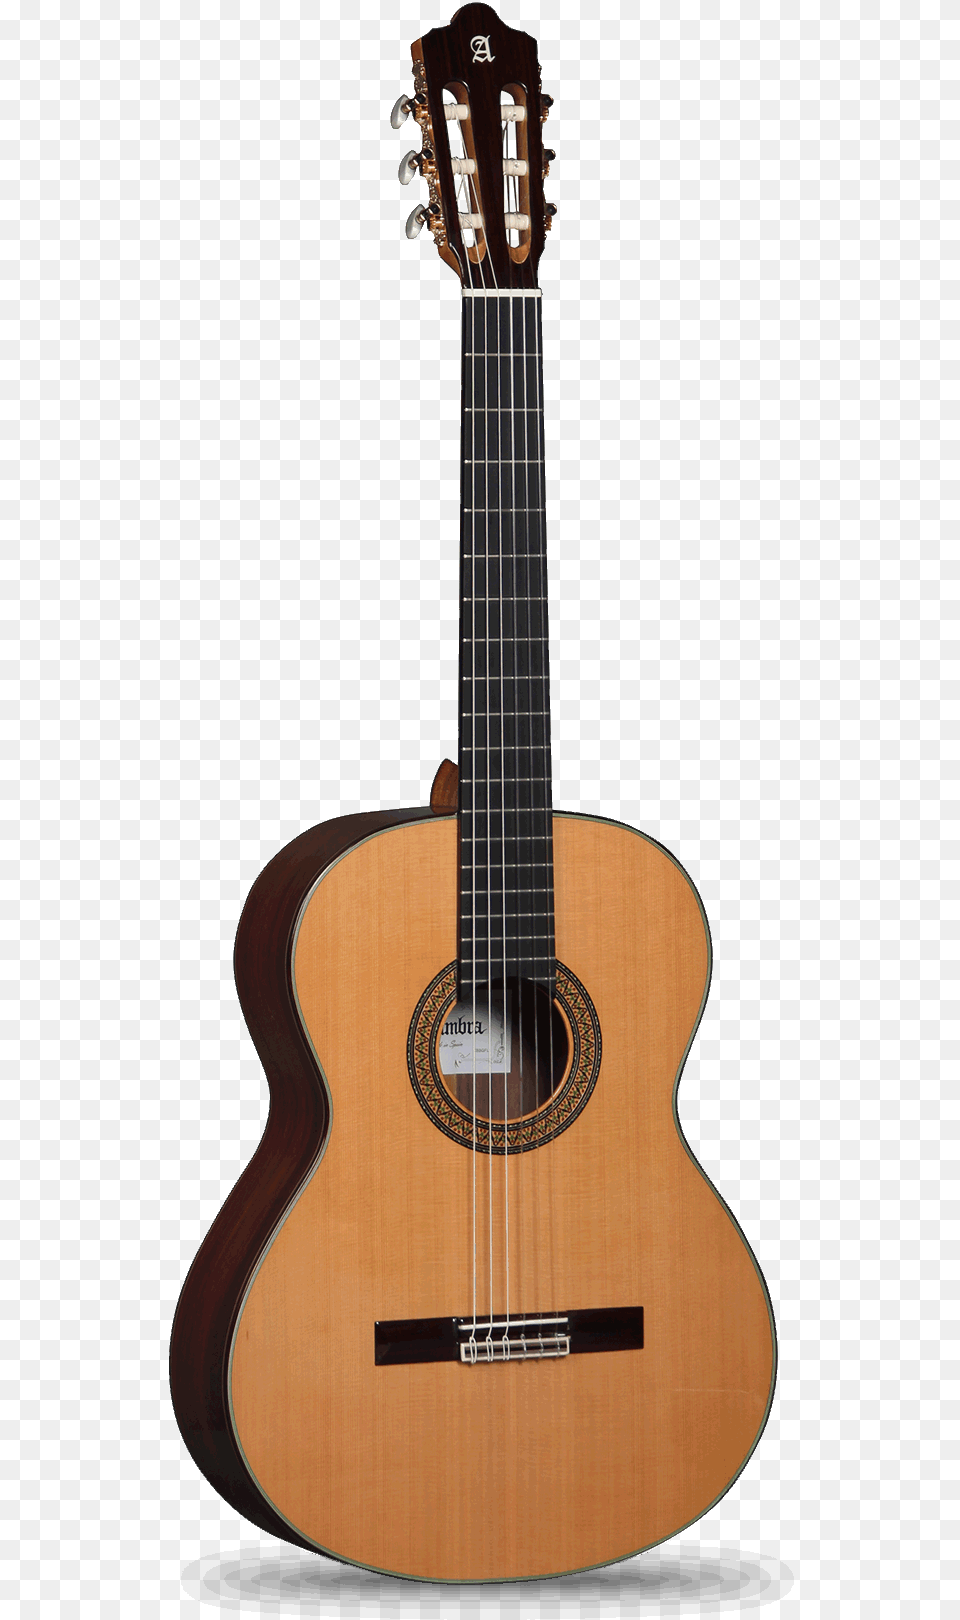 Guitarras Alhambra Conservatory Alhambra Guitar, Musical Instrument, Bass Guitar Png